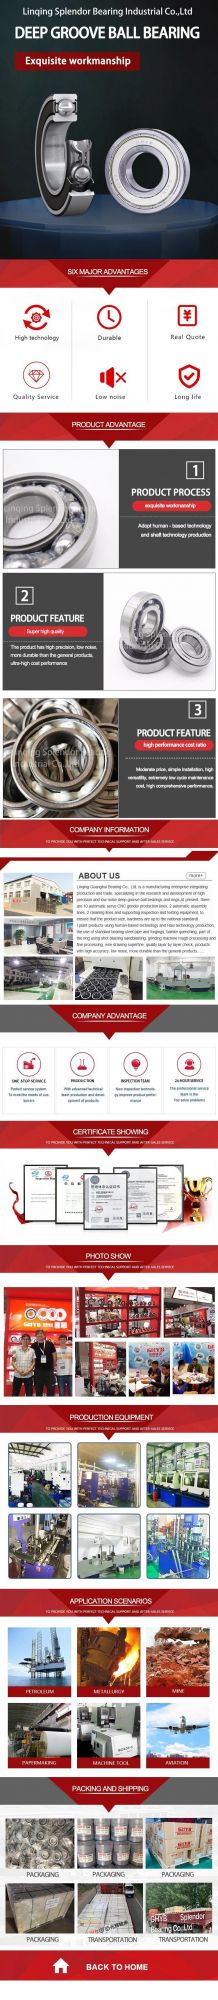 China Factory Distributor Supplier of Deep Groove Ball Bearings for Motors, Compressors, Alternators 6011-2rz/Z2V2